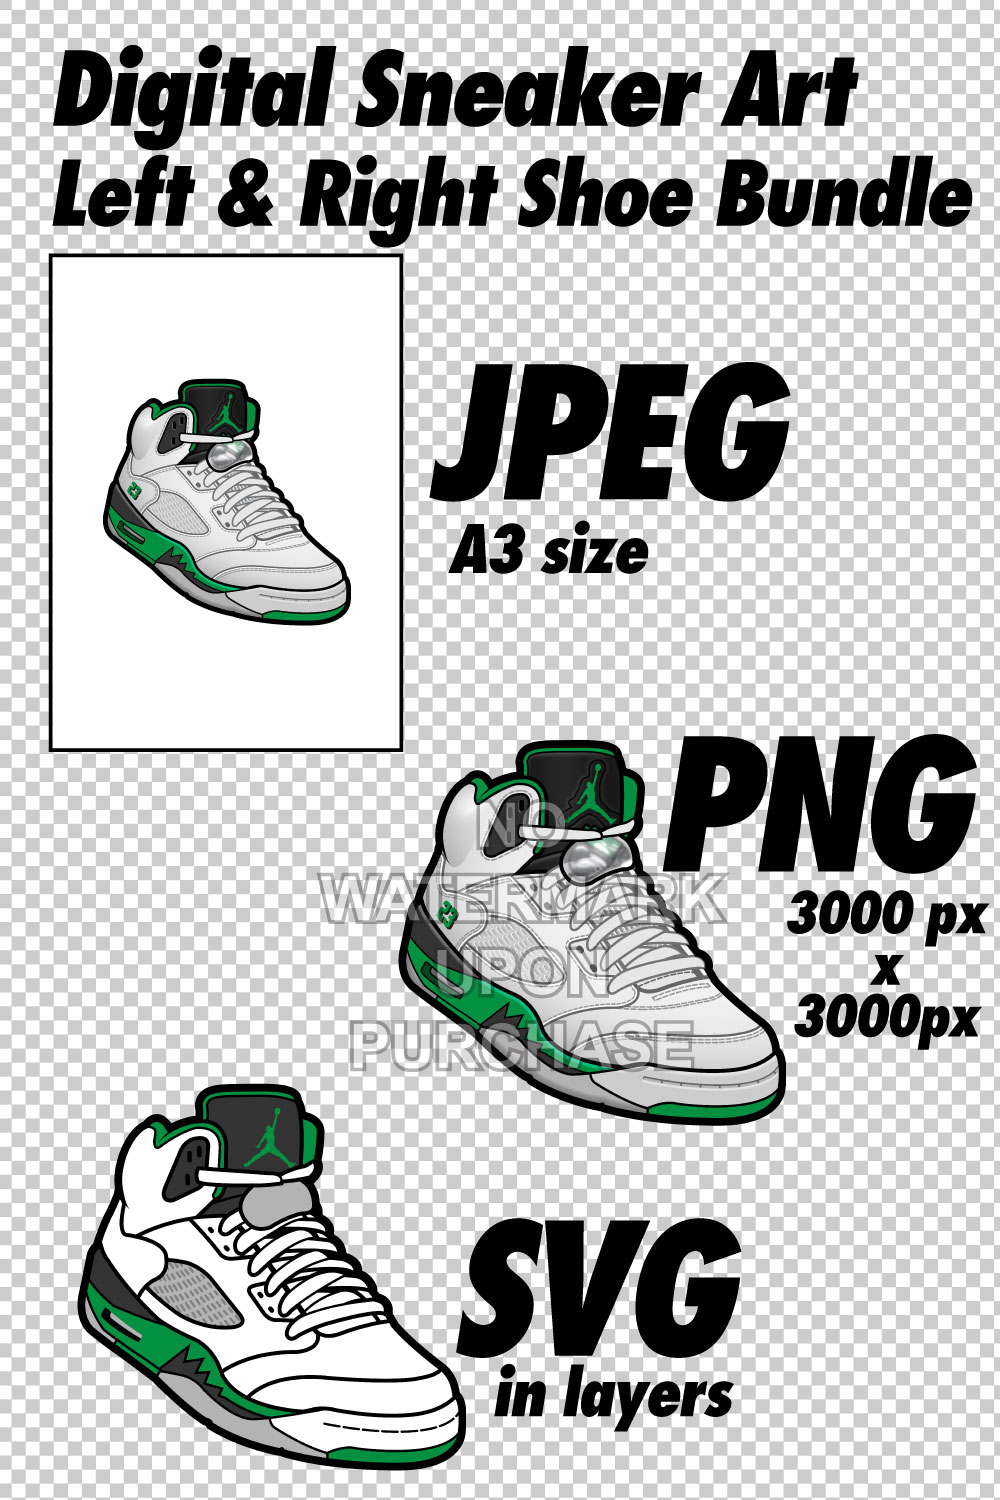 Air Jordan 5 Lucky Green JPEG PNG SVG right & left shoe bundle pinterest preview image.